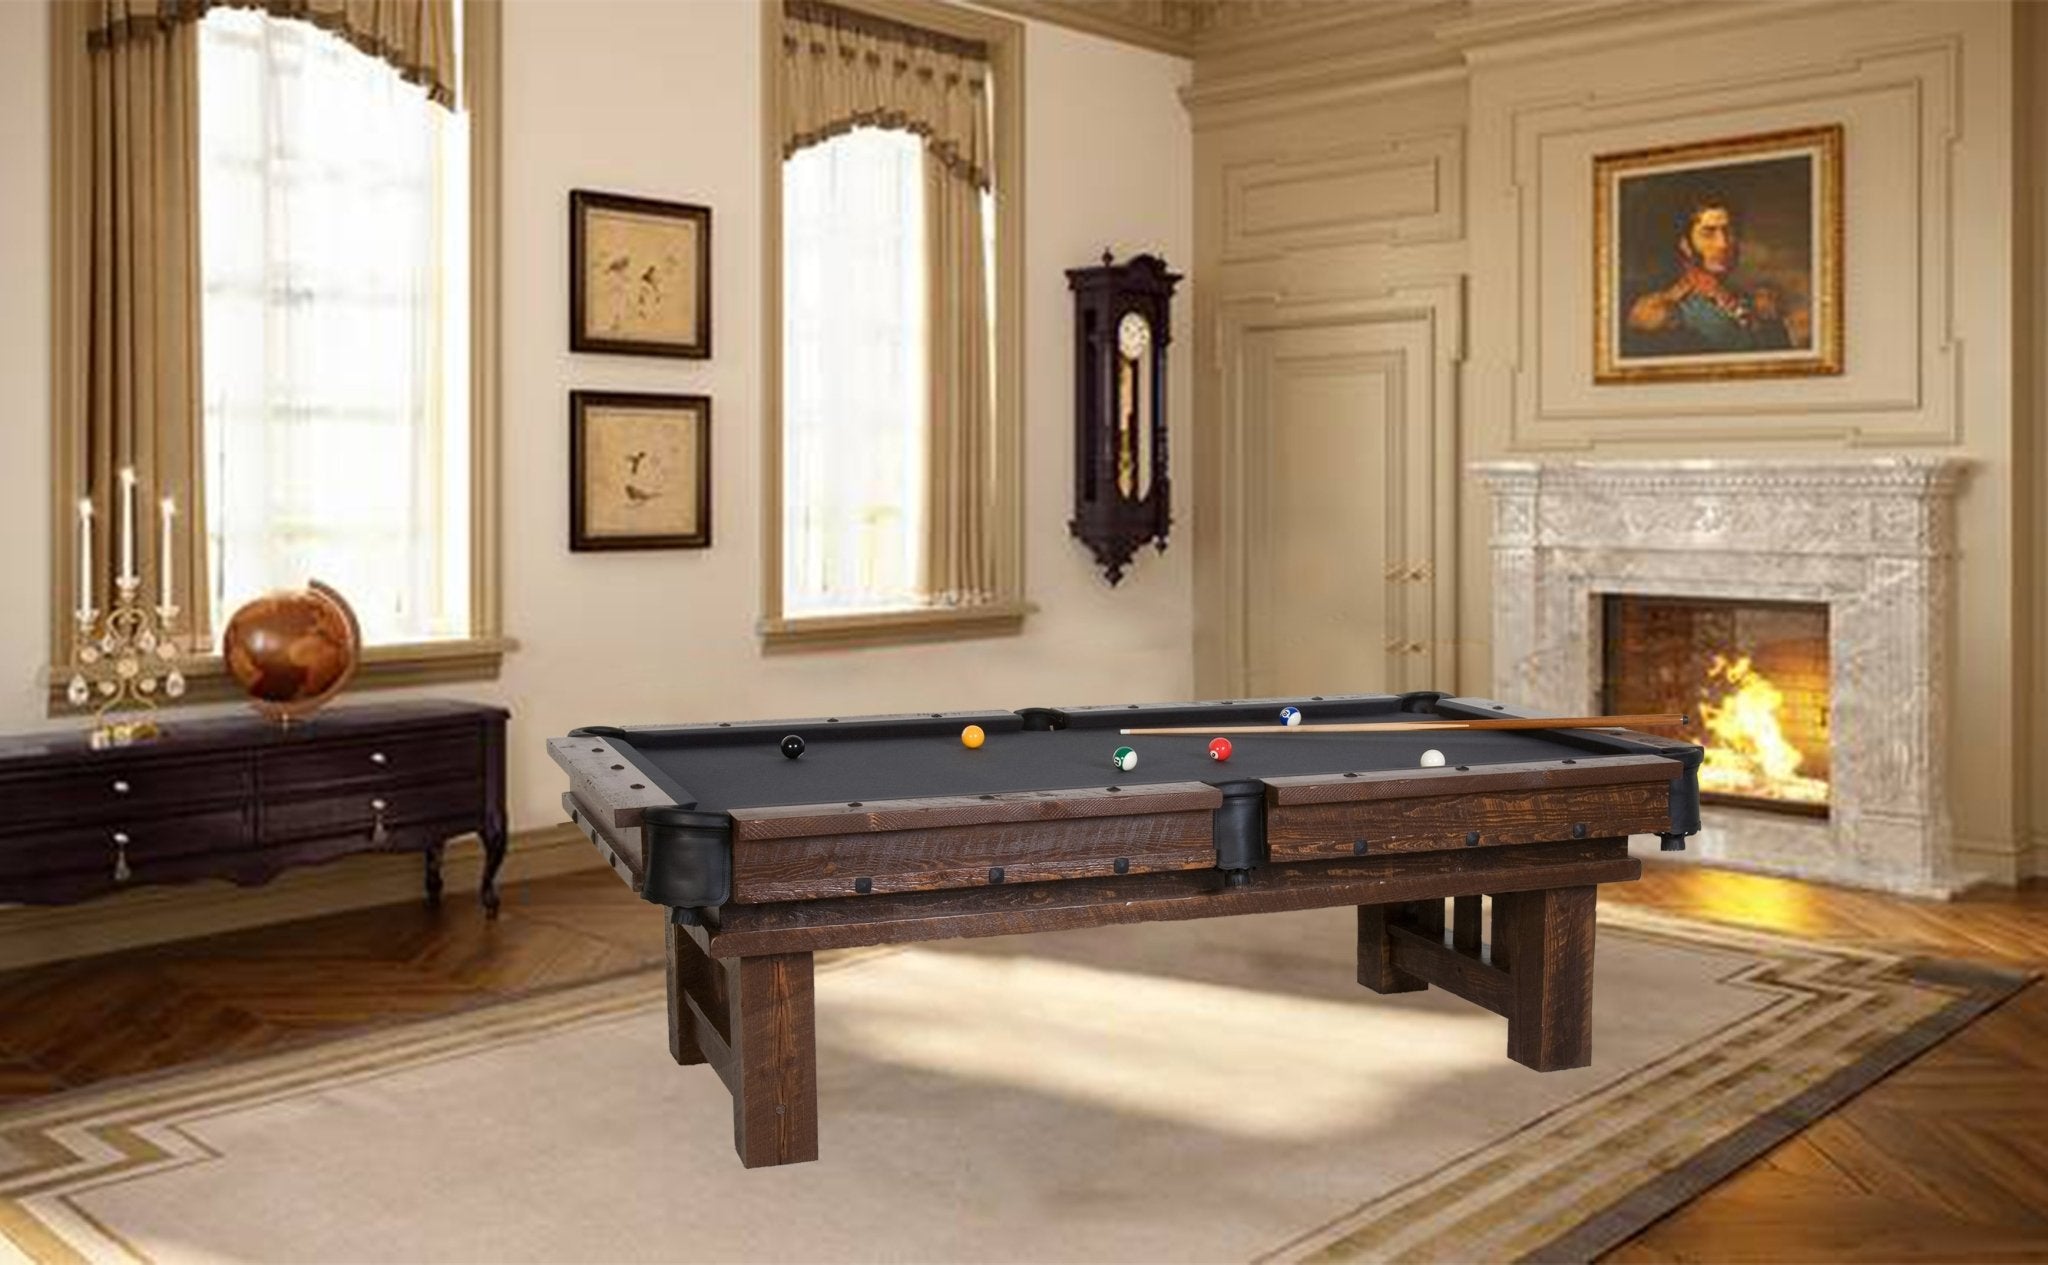 Viking Industries Barnwood Cheyenne Billiard Table with FREE Barnwood Triangle - The Family Game Room